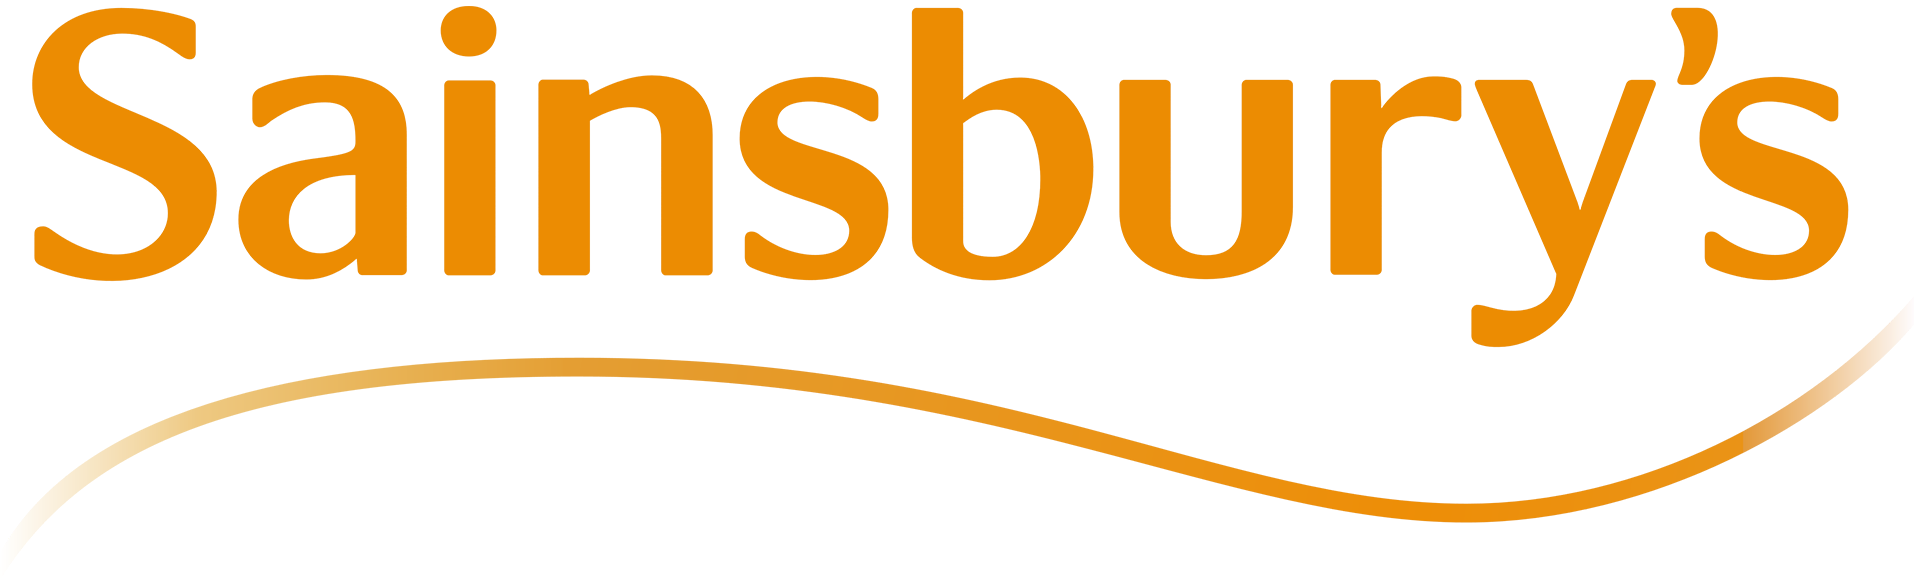 sainsbury's logo